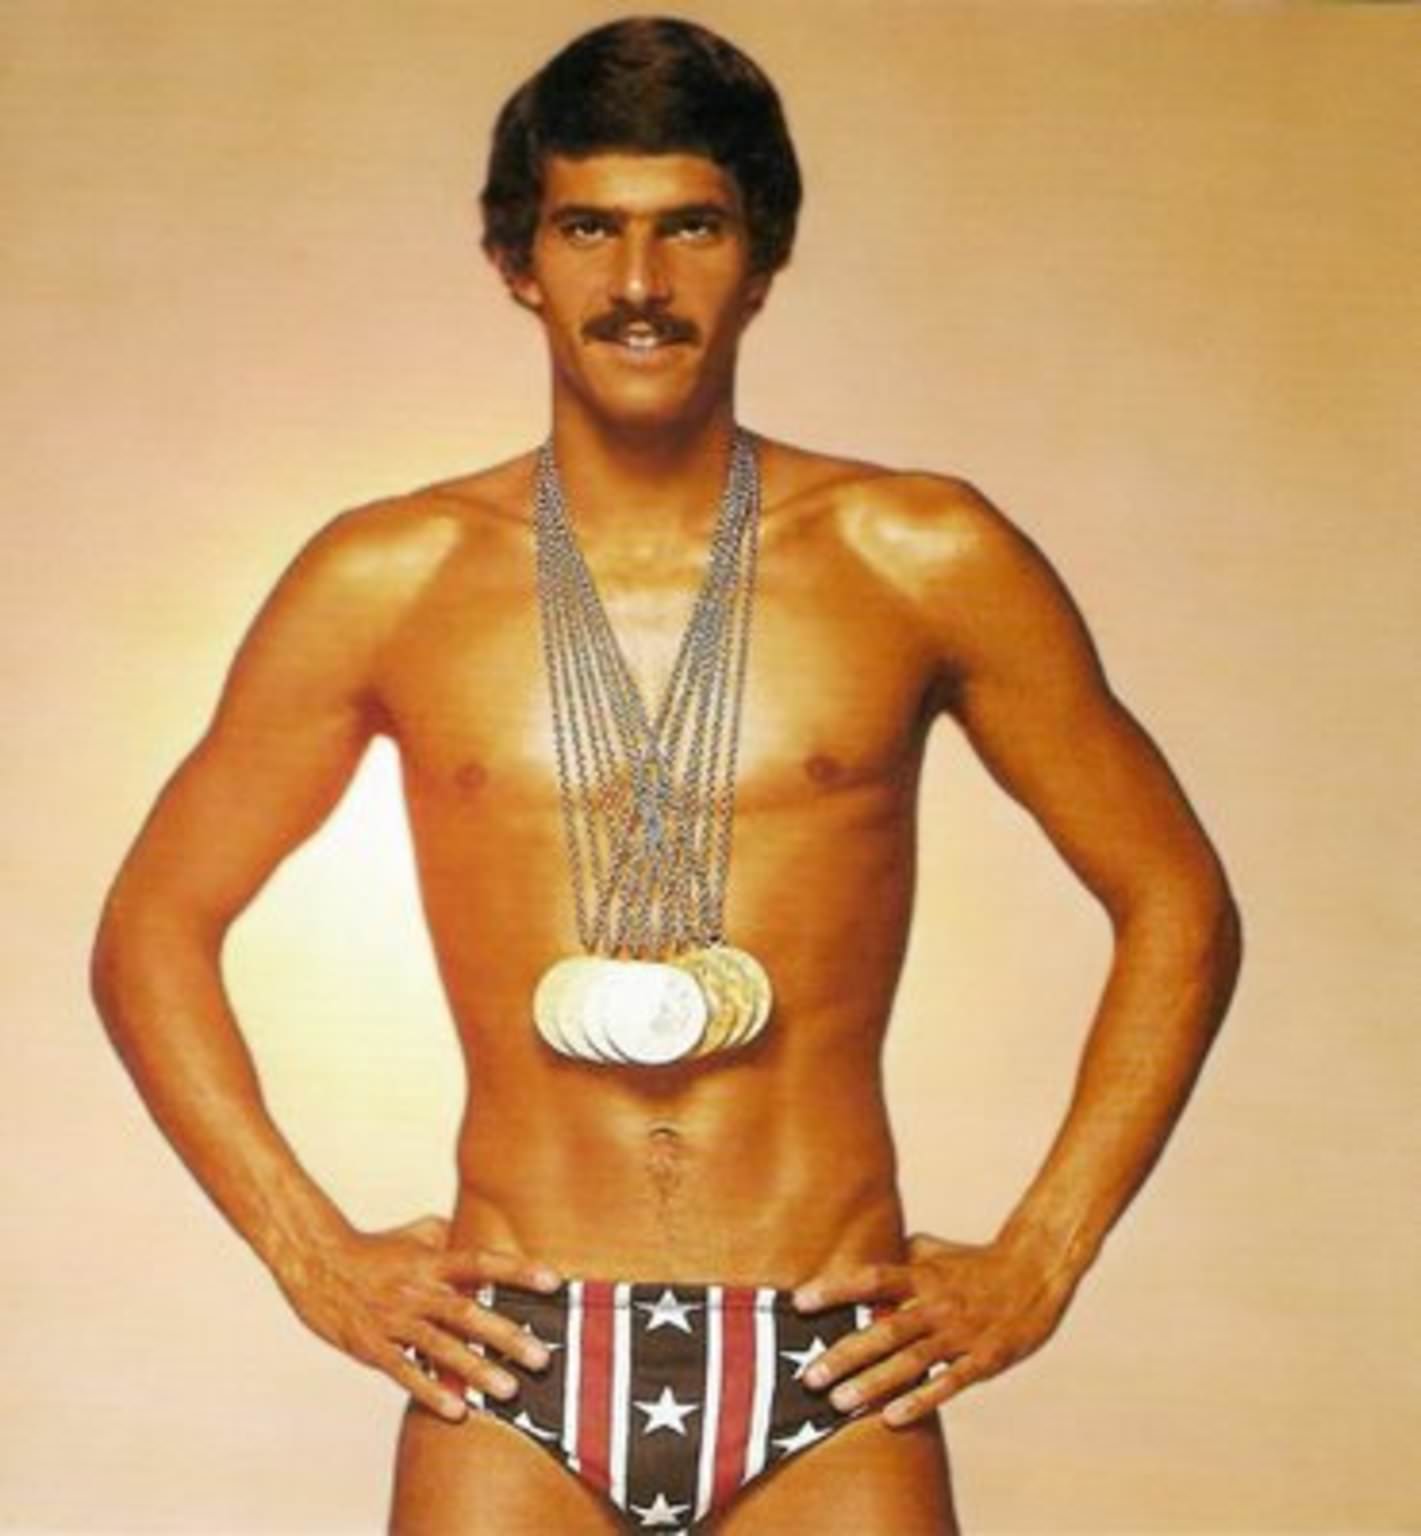 Mark Spitz, superado 36 anos depois na história olímpica por Phelps - Foto: Sport Illustrated